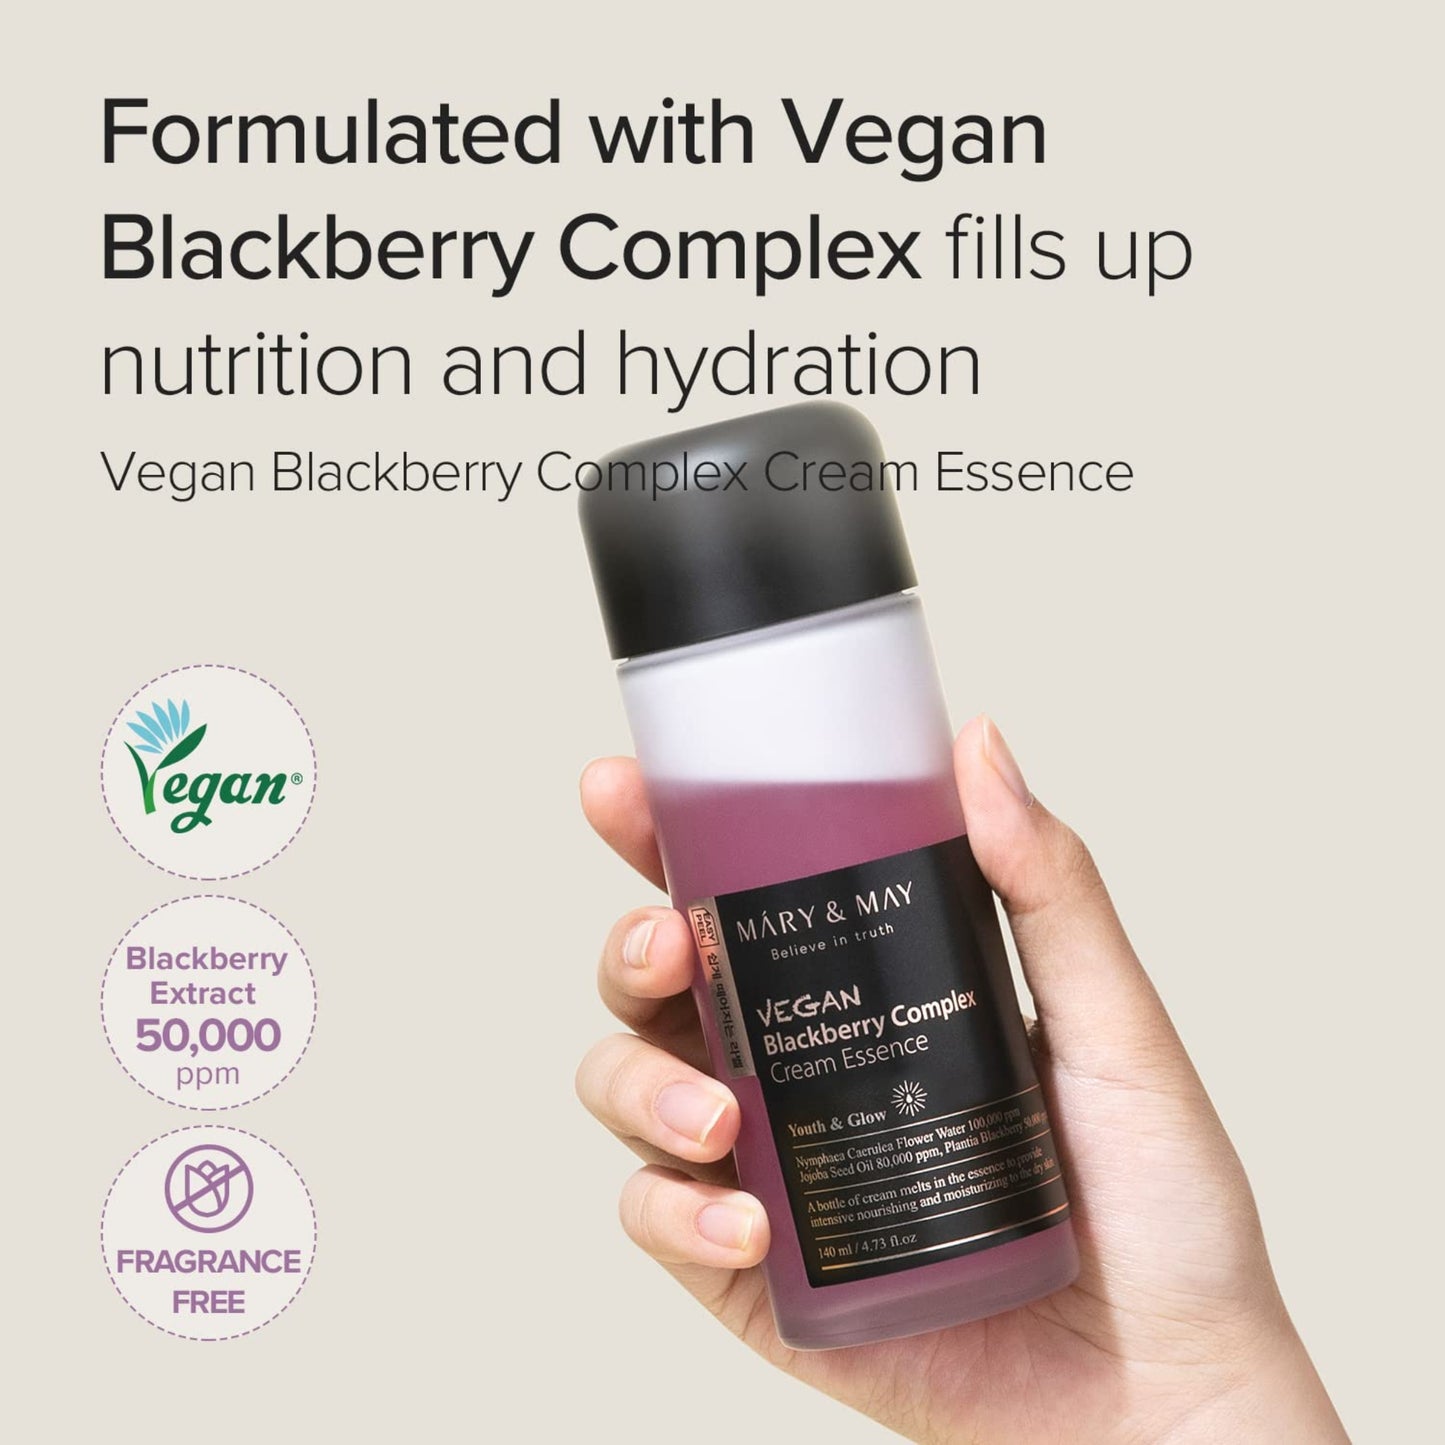 MARY & MAY Vegan Blackberry Complex Cream Essence